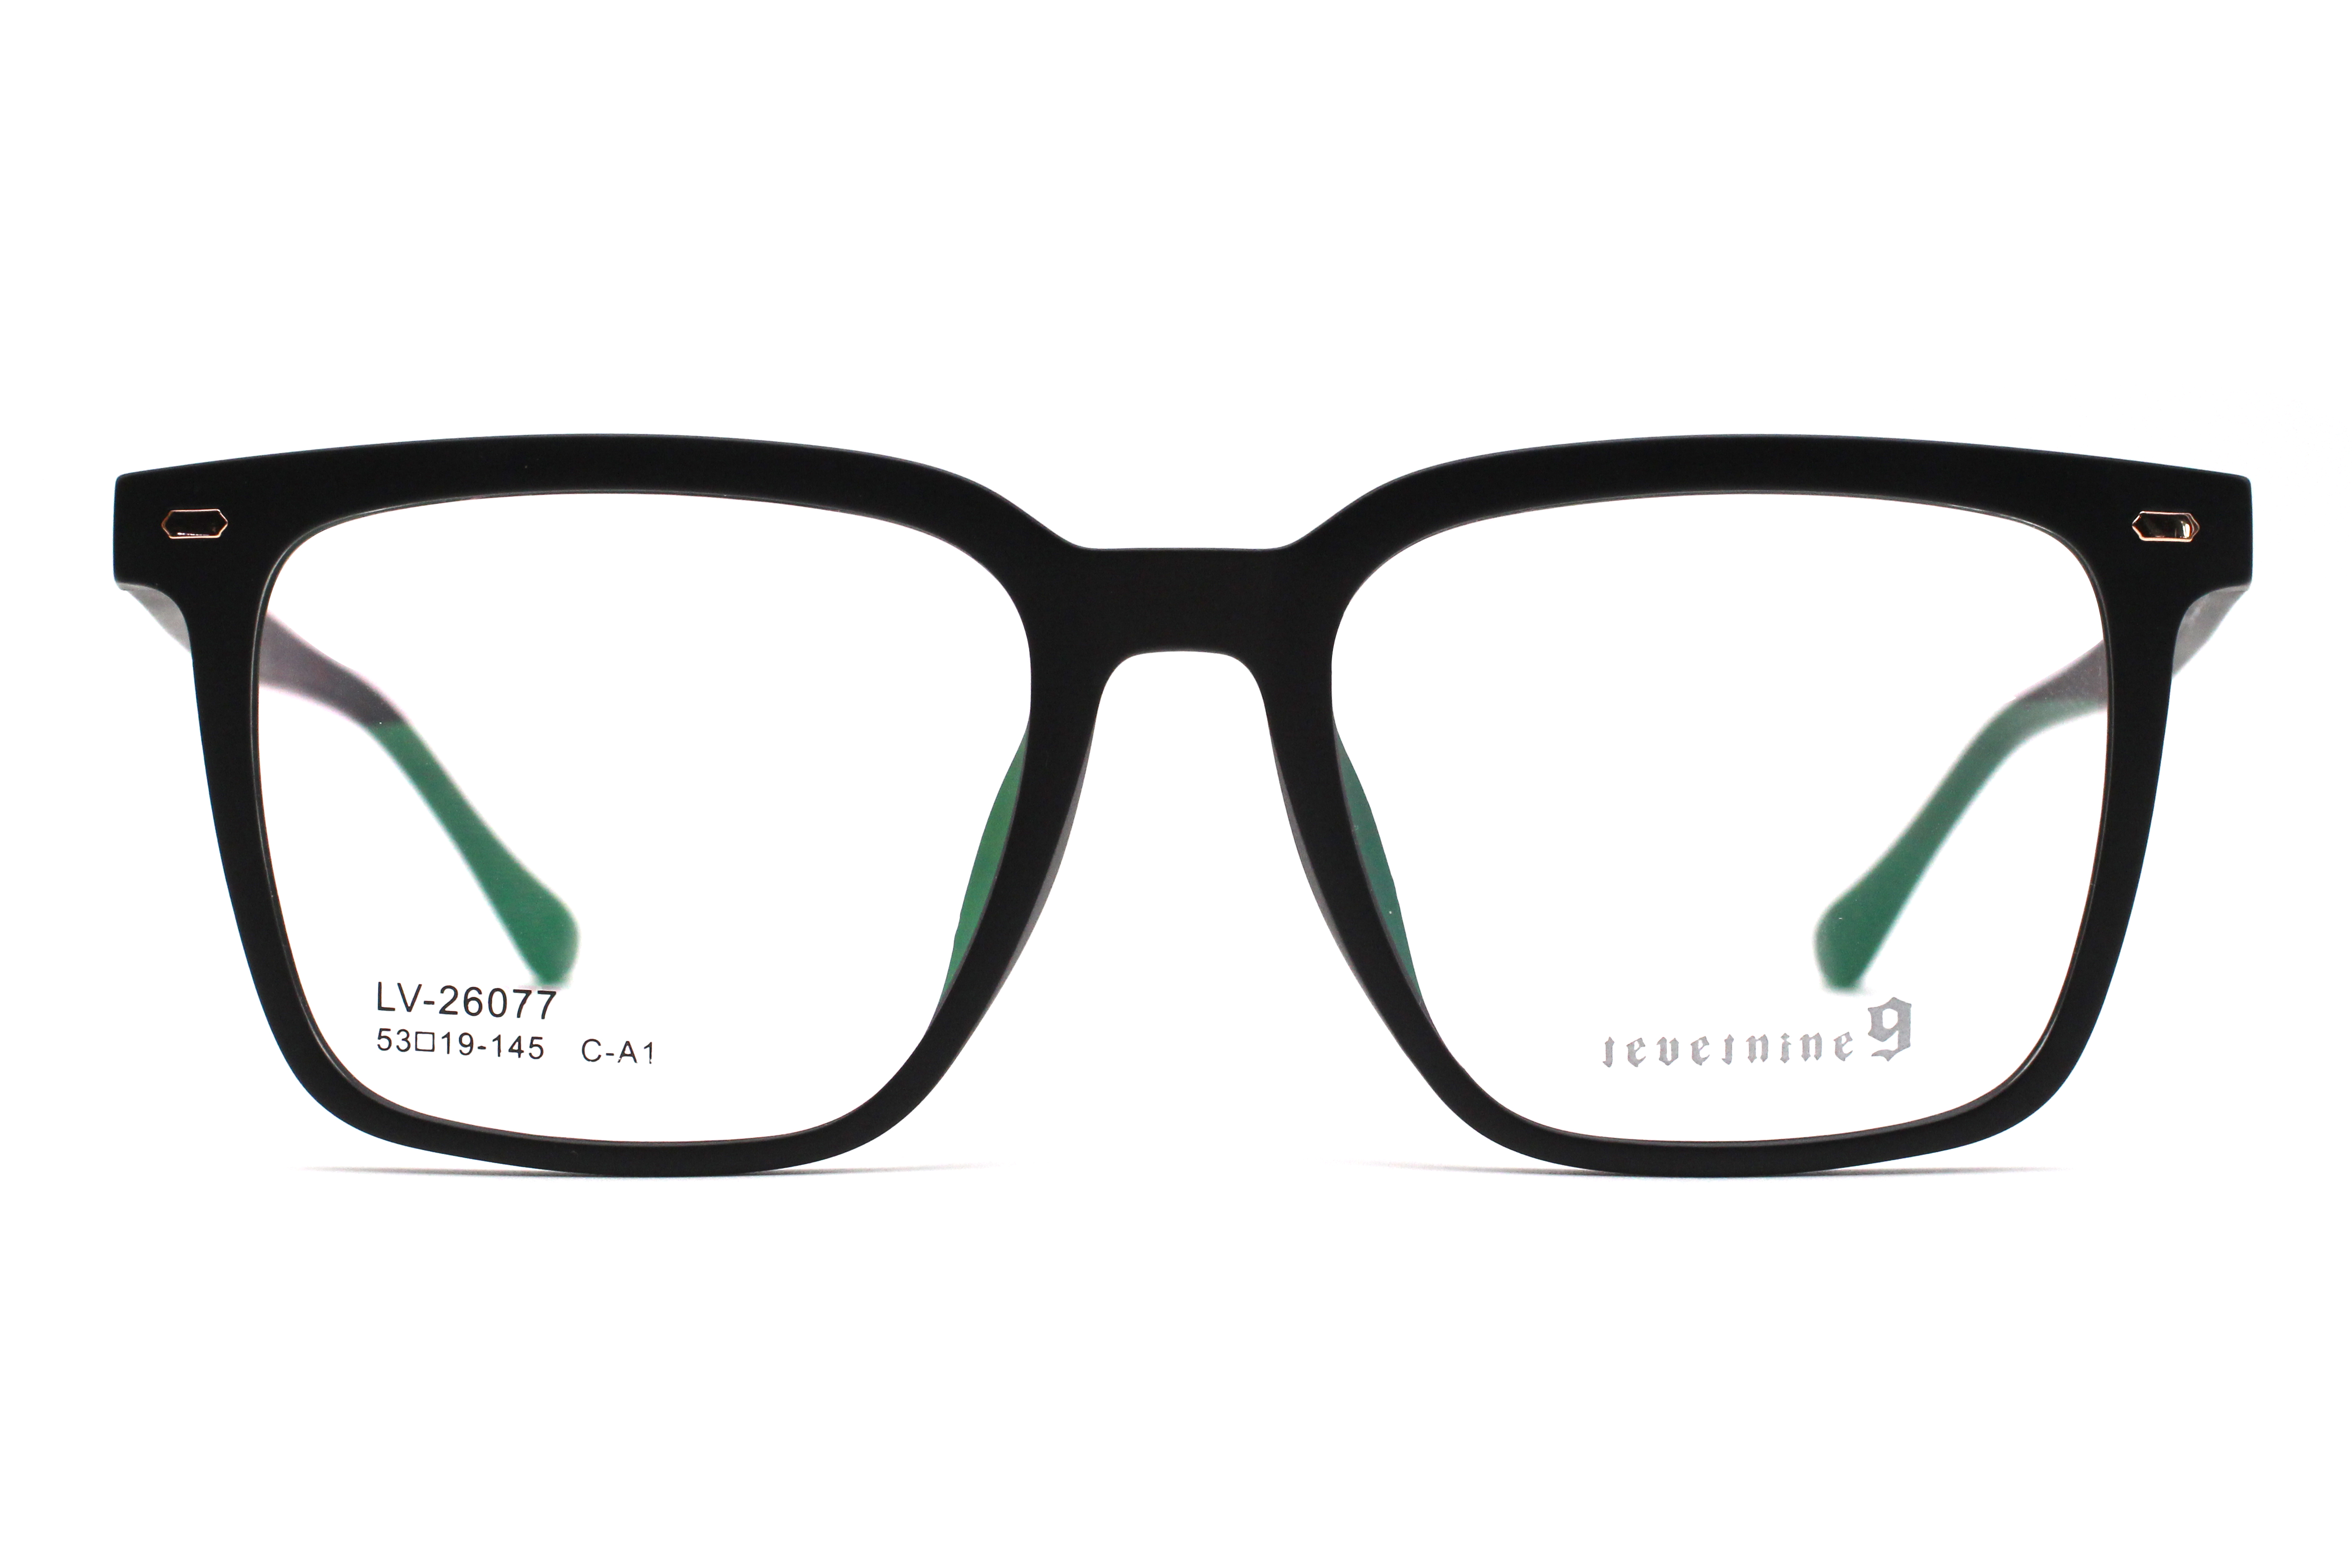 Optical Glasses Frames